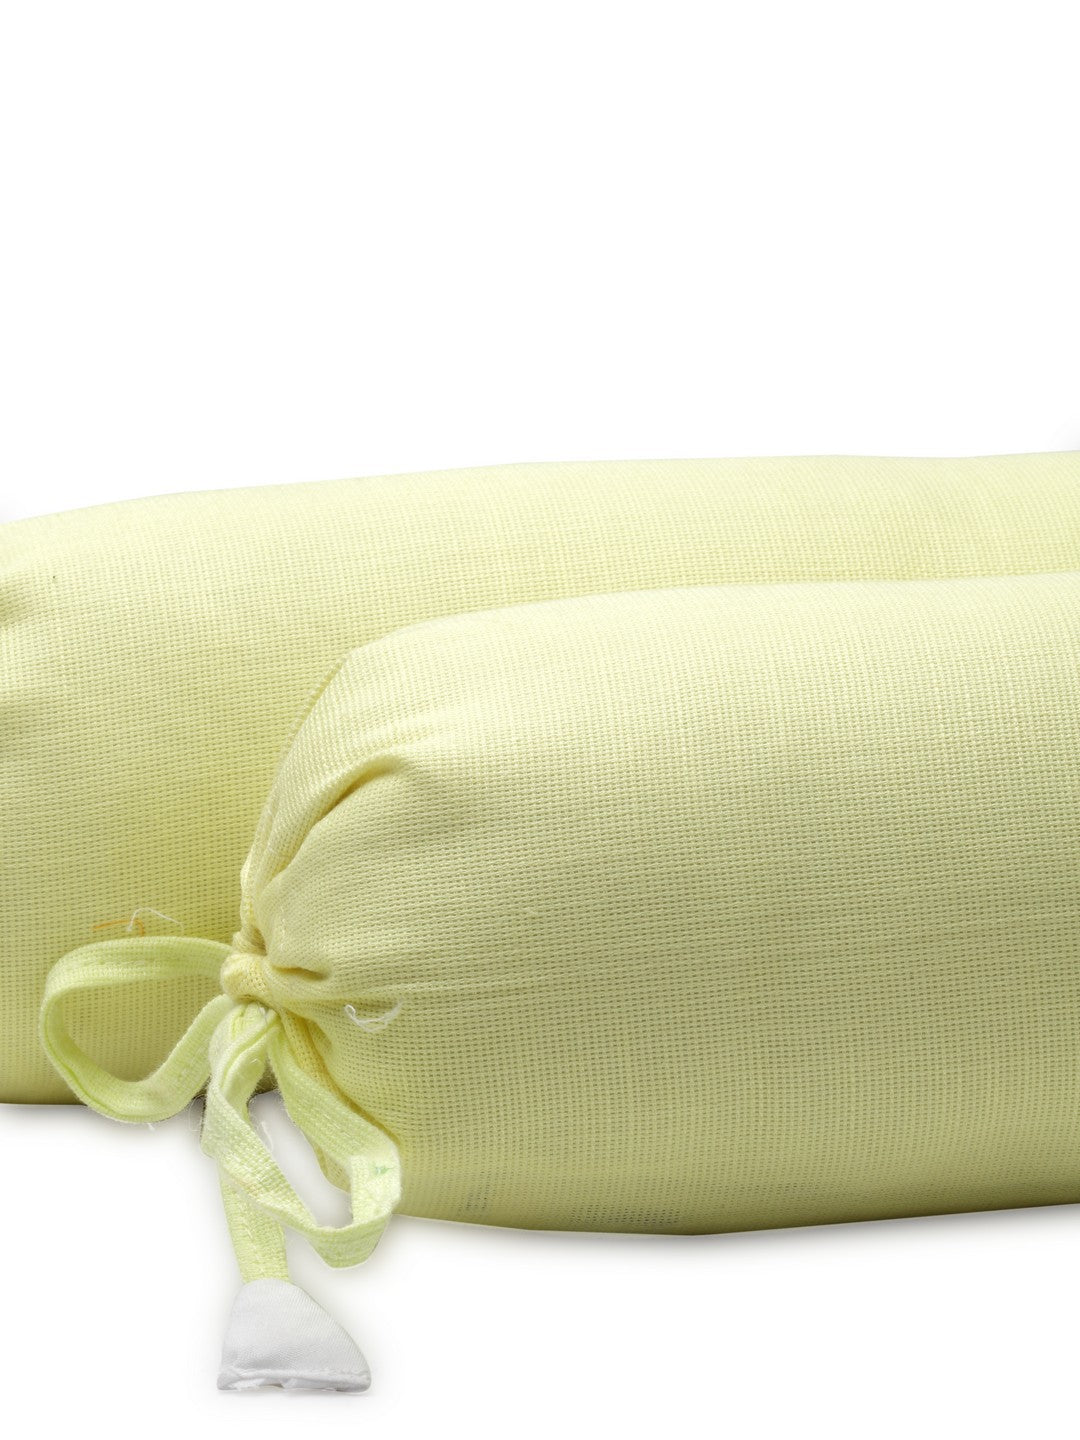 Organic Baby Pillow Filler